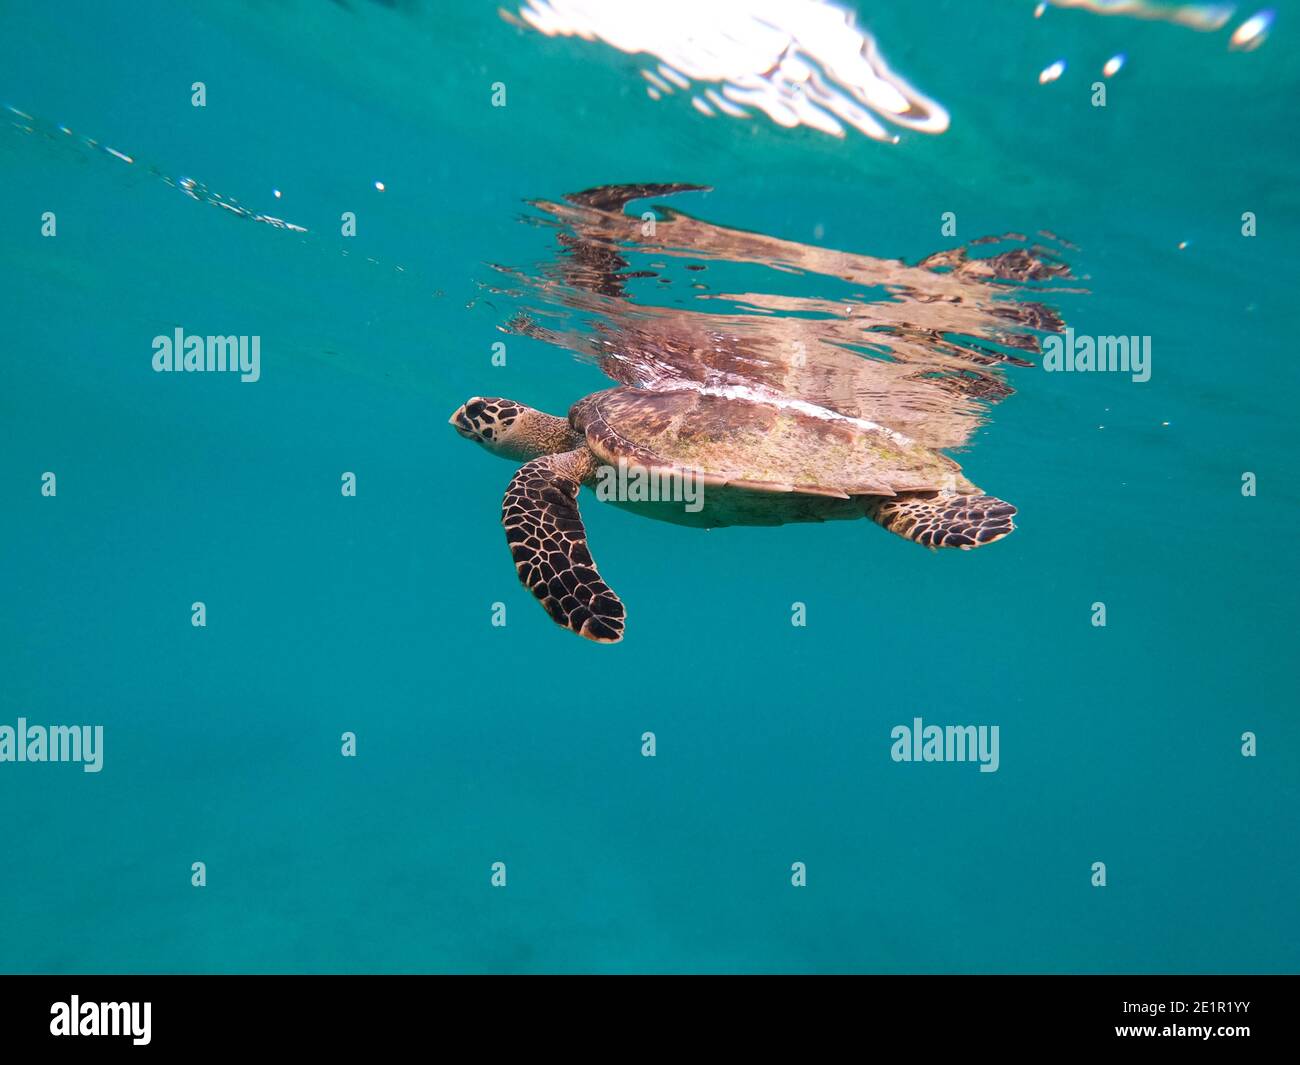 Tortuga carey (Eretmochelys imbricata) en el agua azul claro, Seychelles Foto de stock